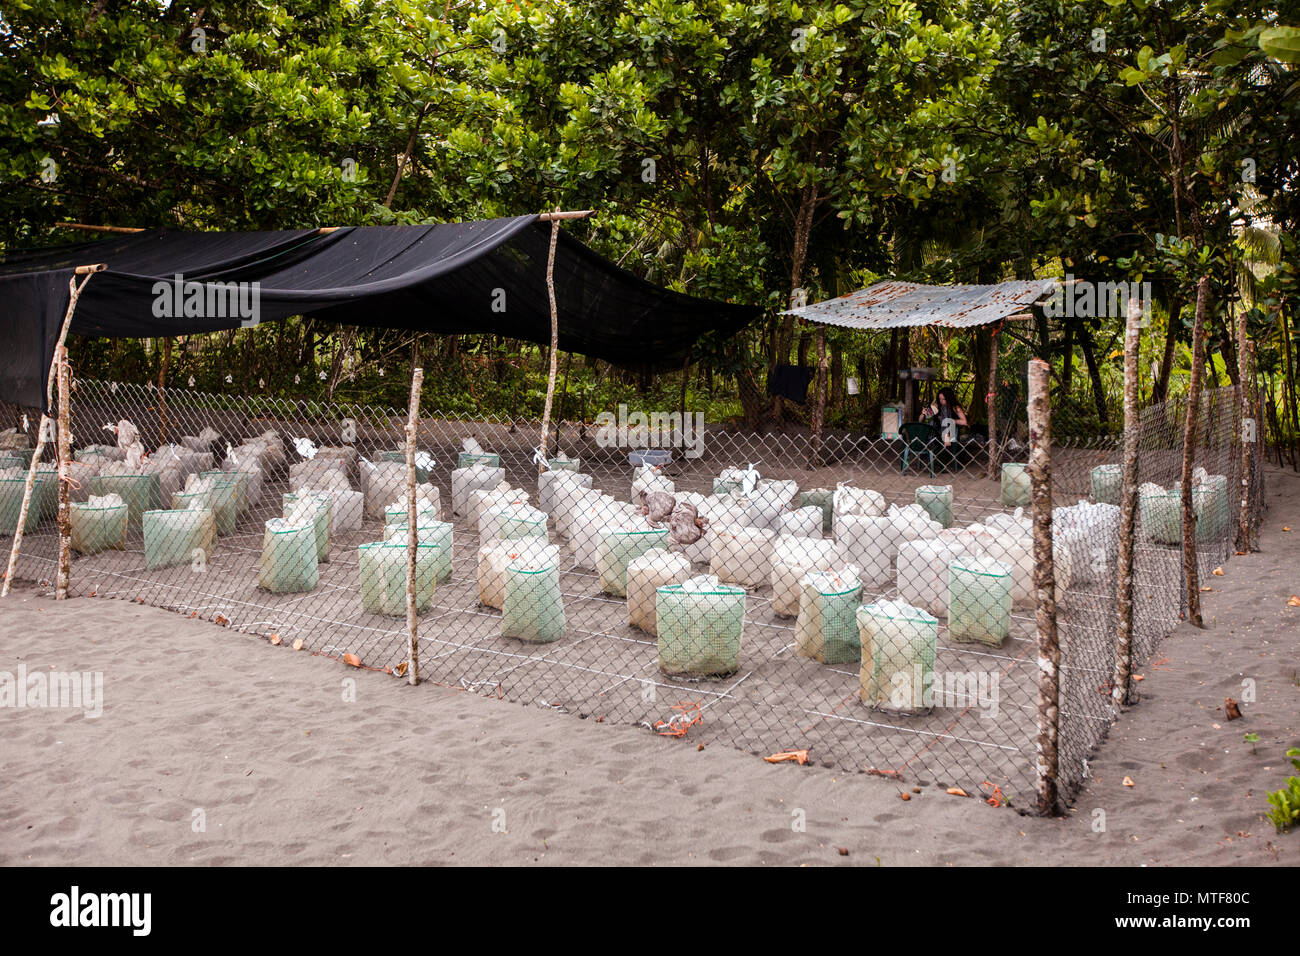 Hatchery of Biosphere Citizen Scientist Project Camp to save Sea Turtles in Reventazón, Costa Rica Stock Photo